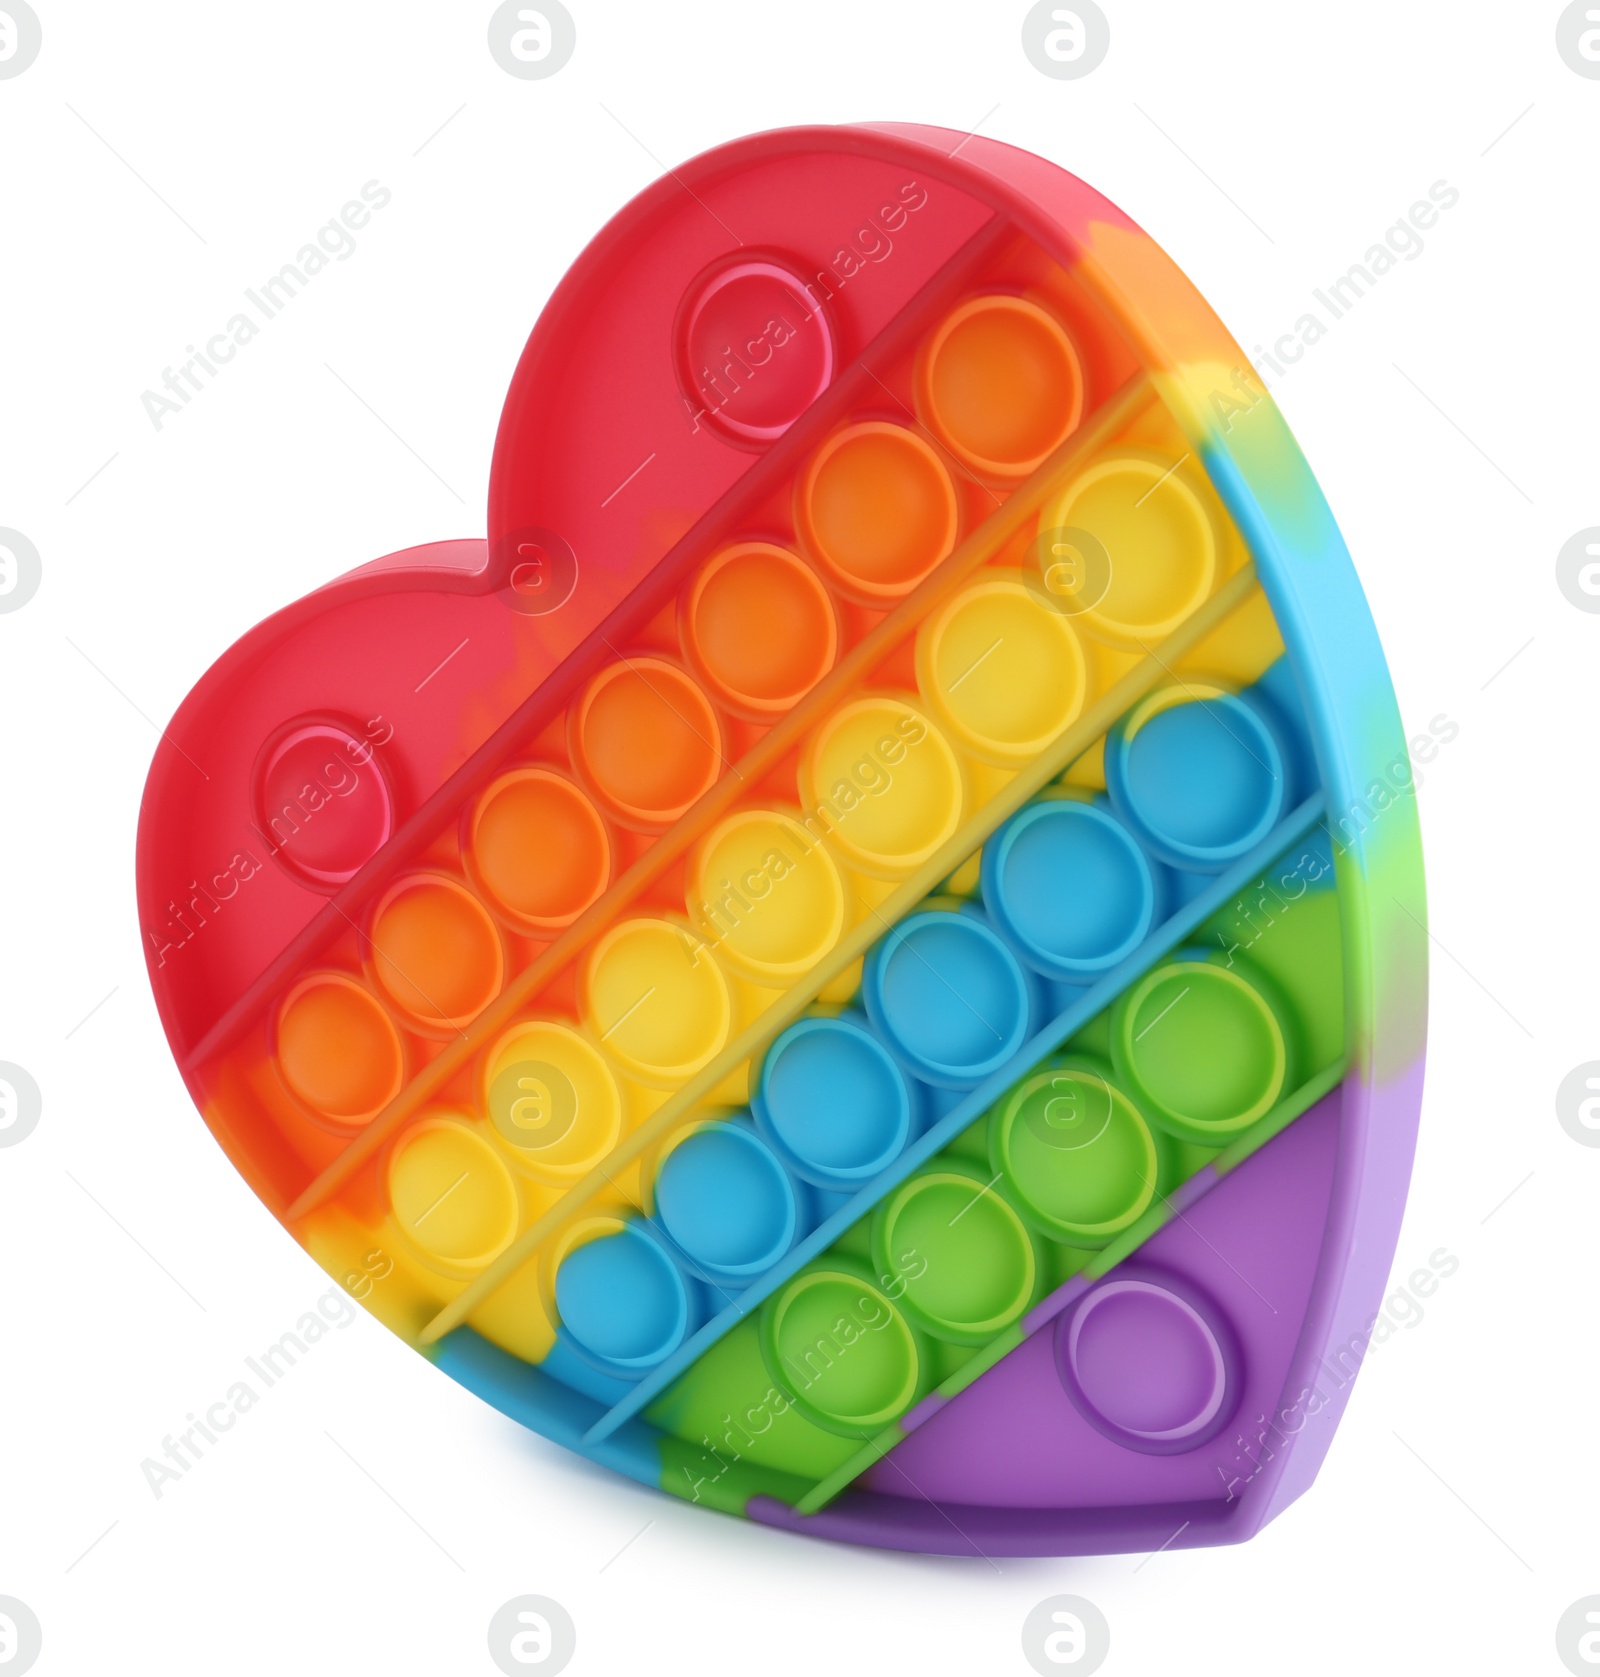 Photo of Heart shaped rainbow pop it fidget toy isolated on white